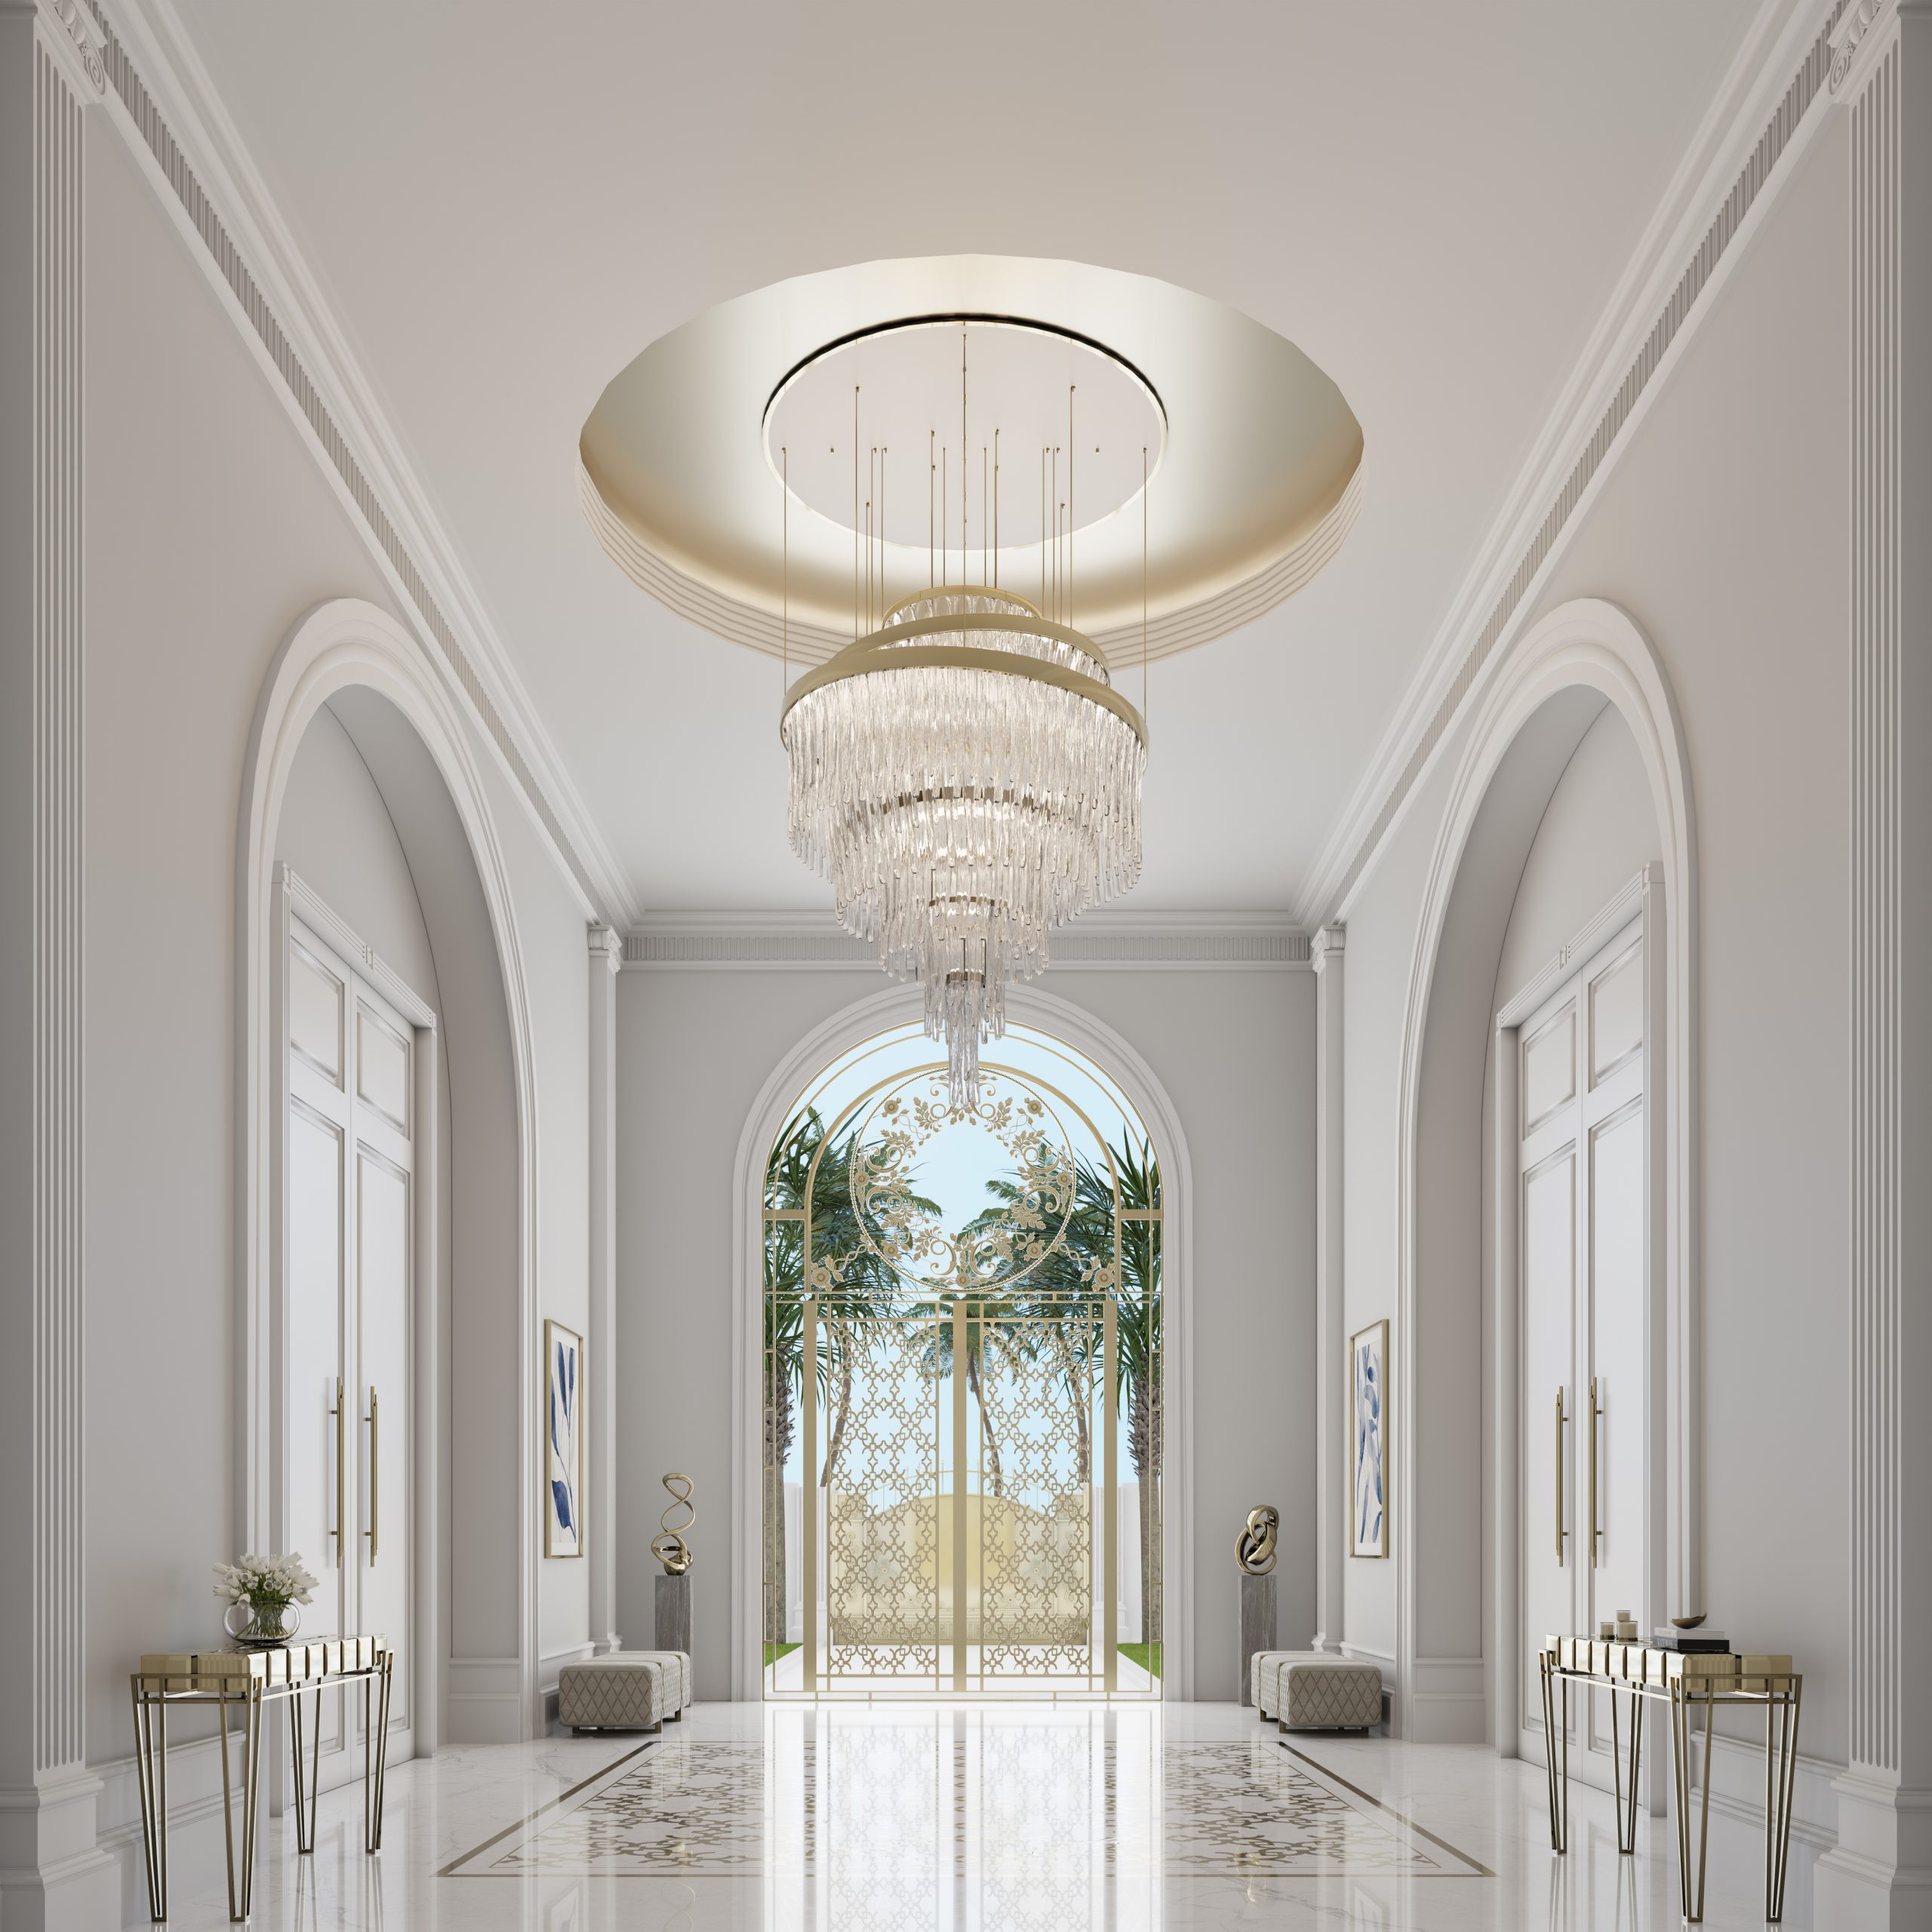 Meraki Palace In Qatar: Feel The Modern Design With An Arabian Touch